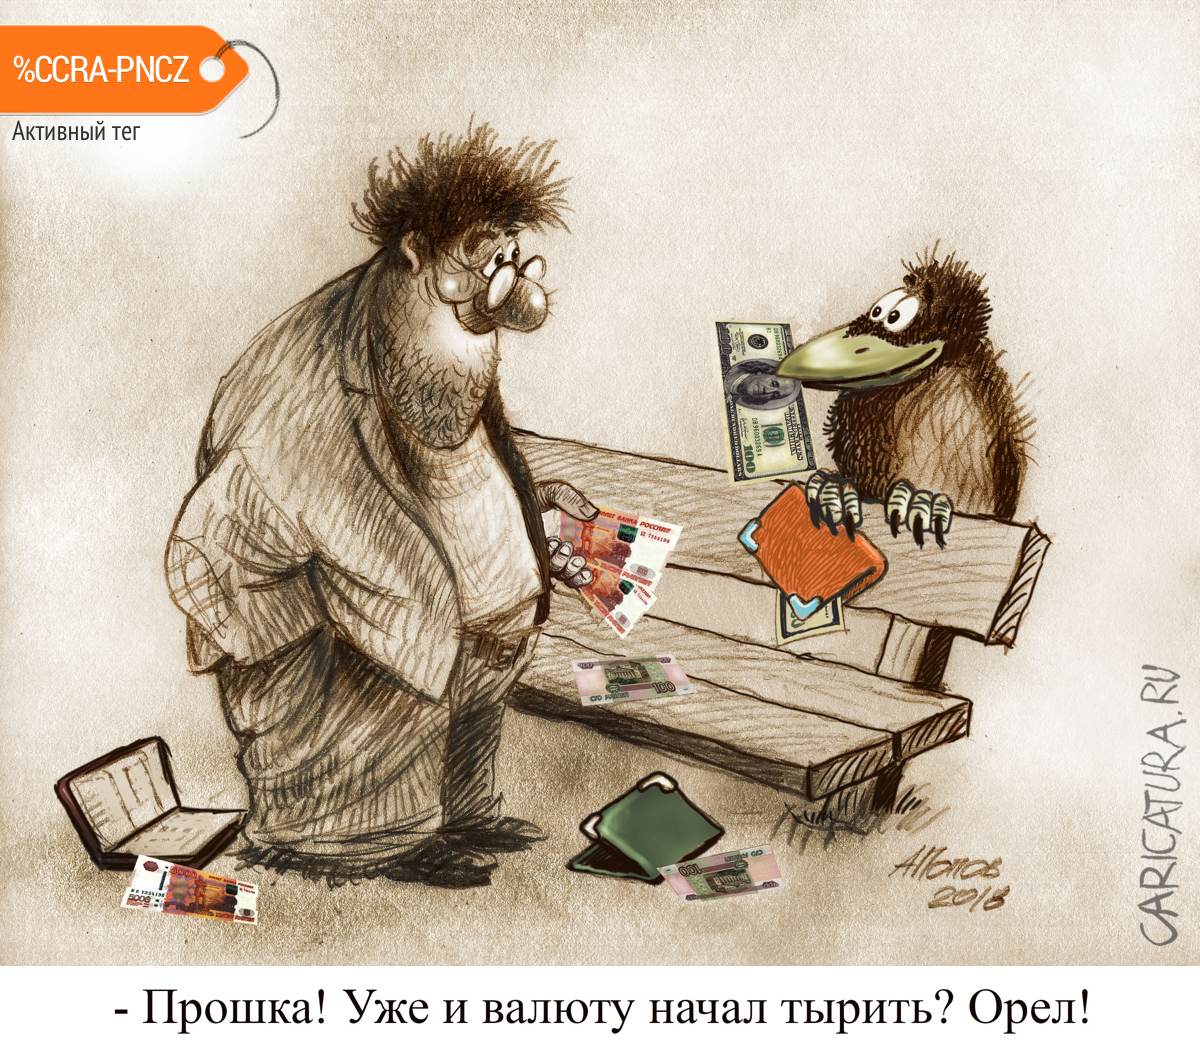 Карикатура "Карьерный рост", Александр Попов